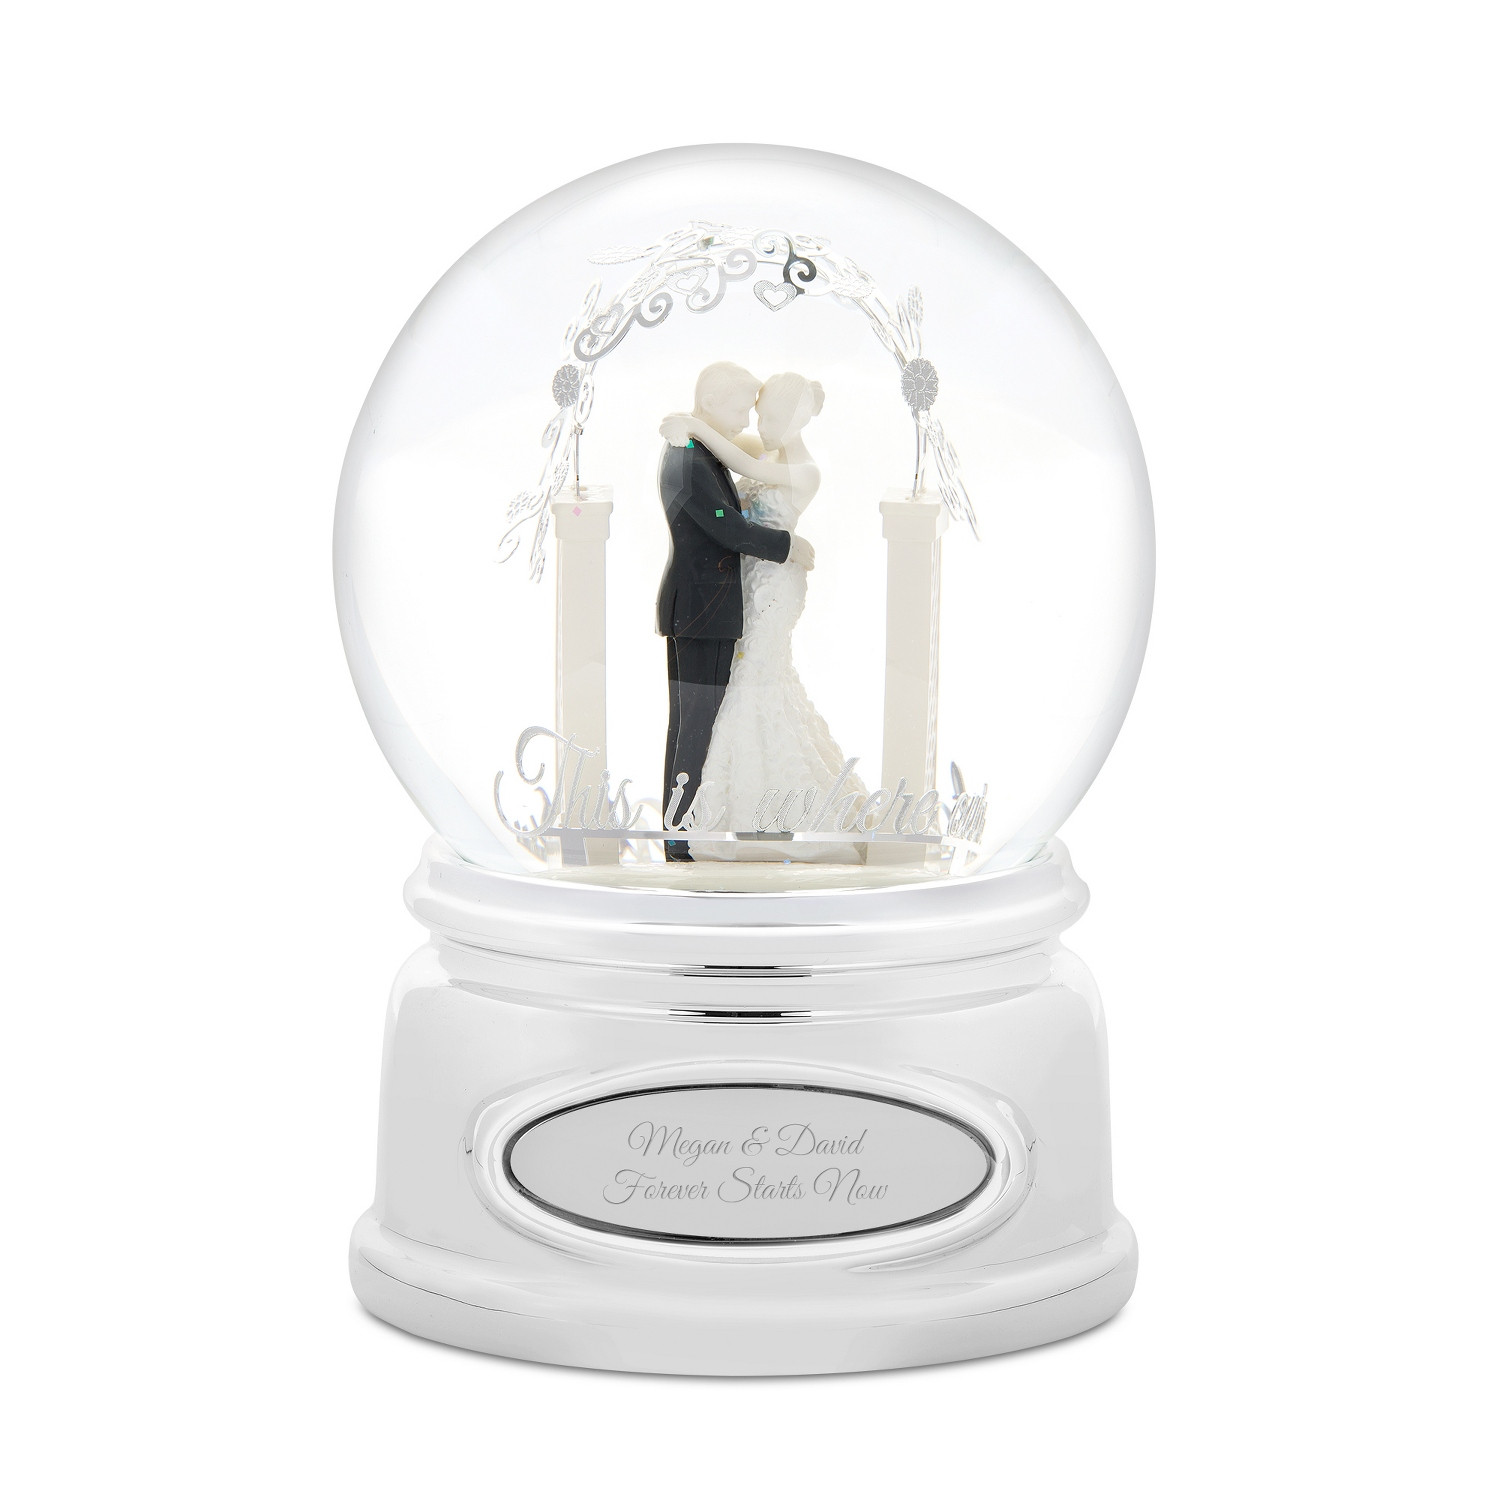 Things Remembered Anniversary Gift Ideas
 Bride & Groom Wedding Musical Snow Globe